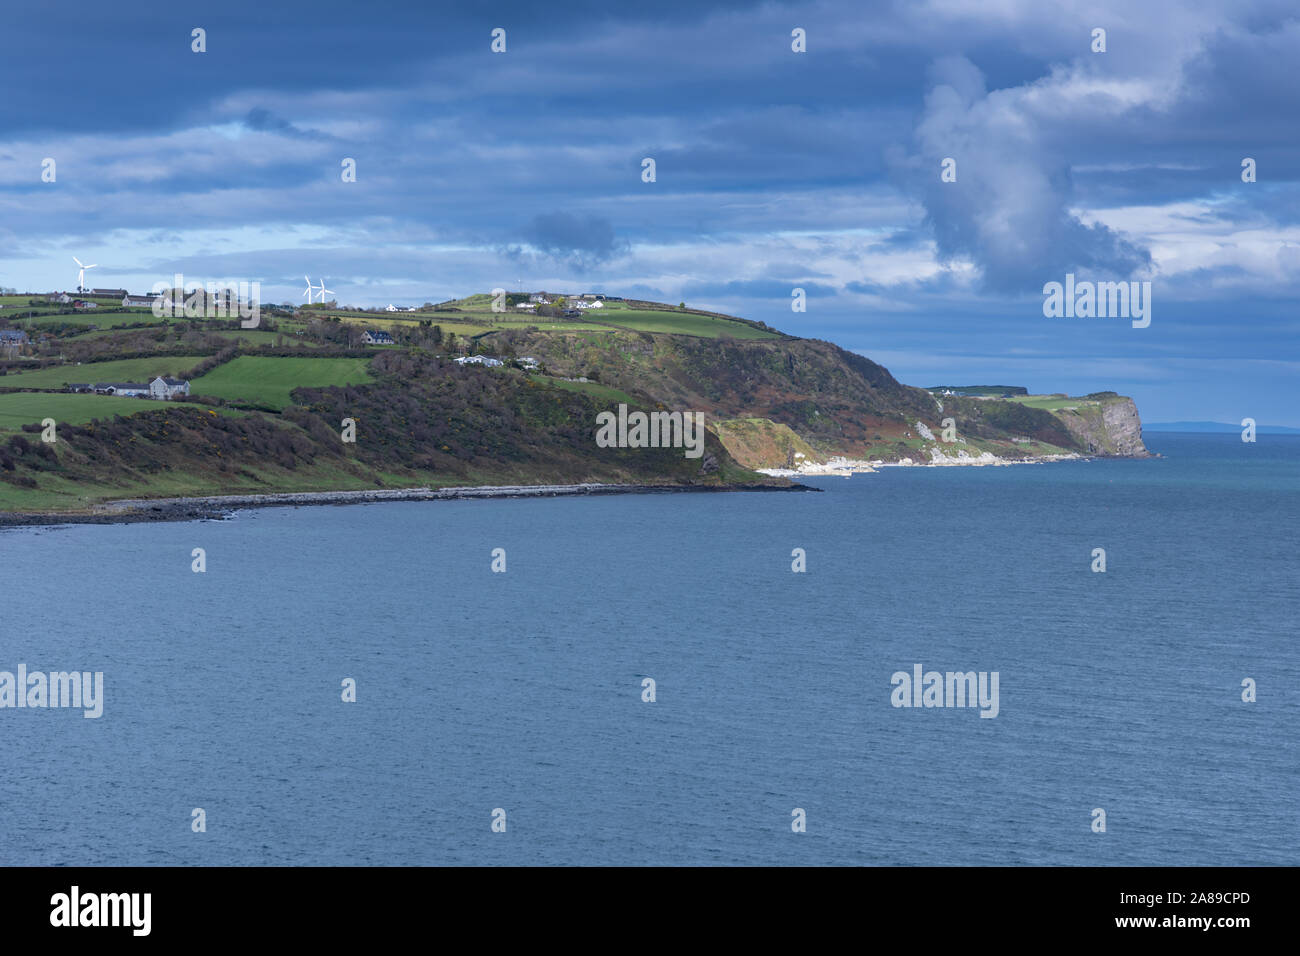 Islandmagee coastline at the entrance to The Gobbins, County Antrim, Causeway coastal route, Northern Ireland Stock Photo